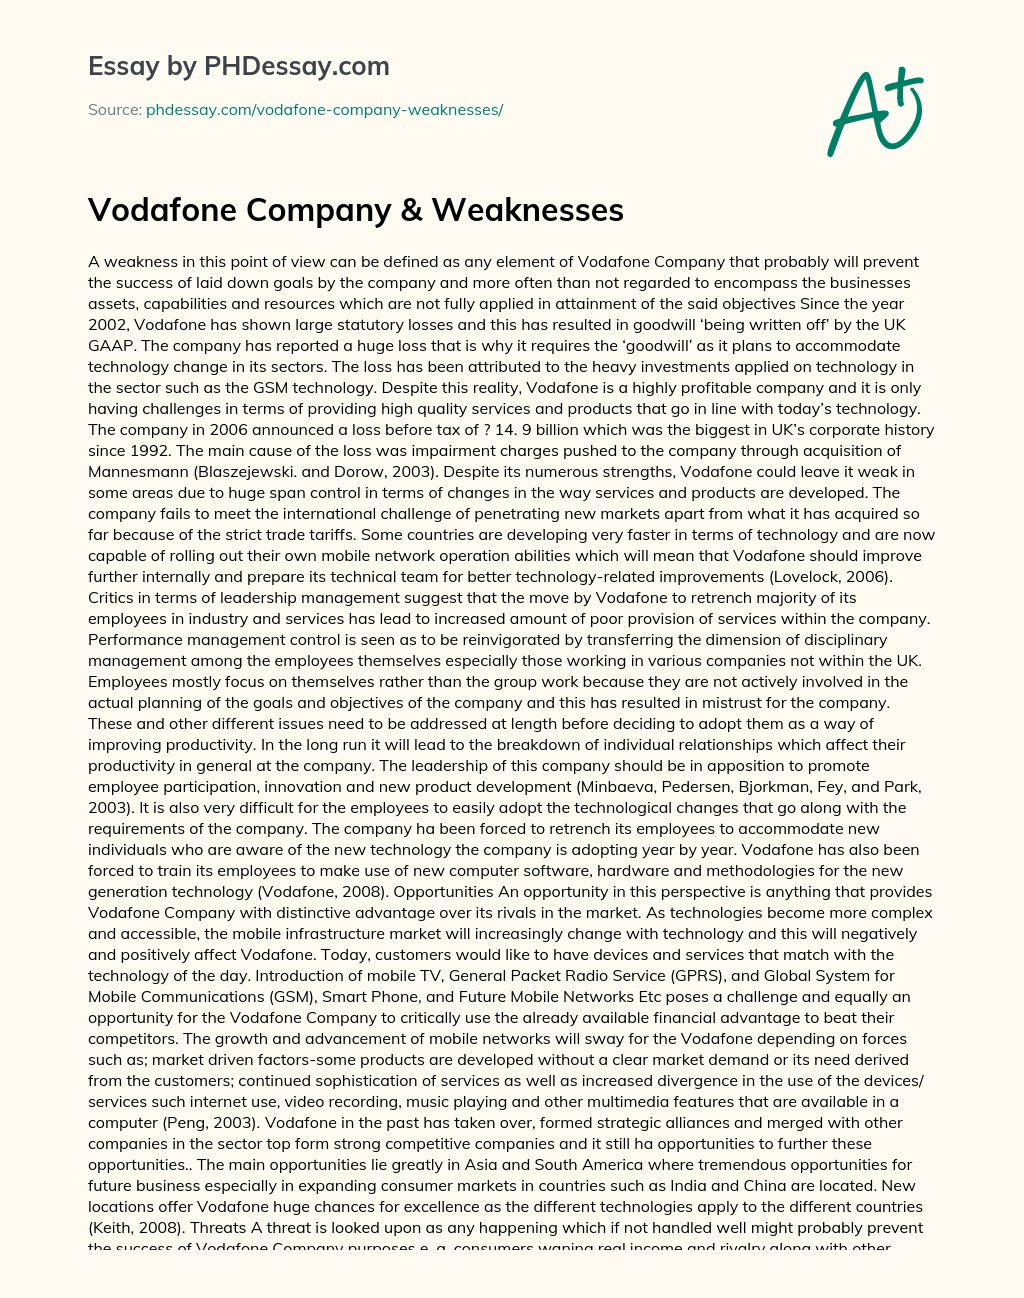 Vodafone Company & Weaknesses essay